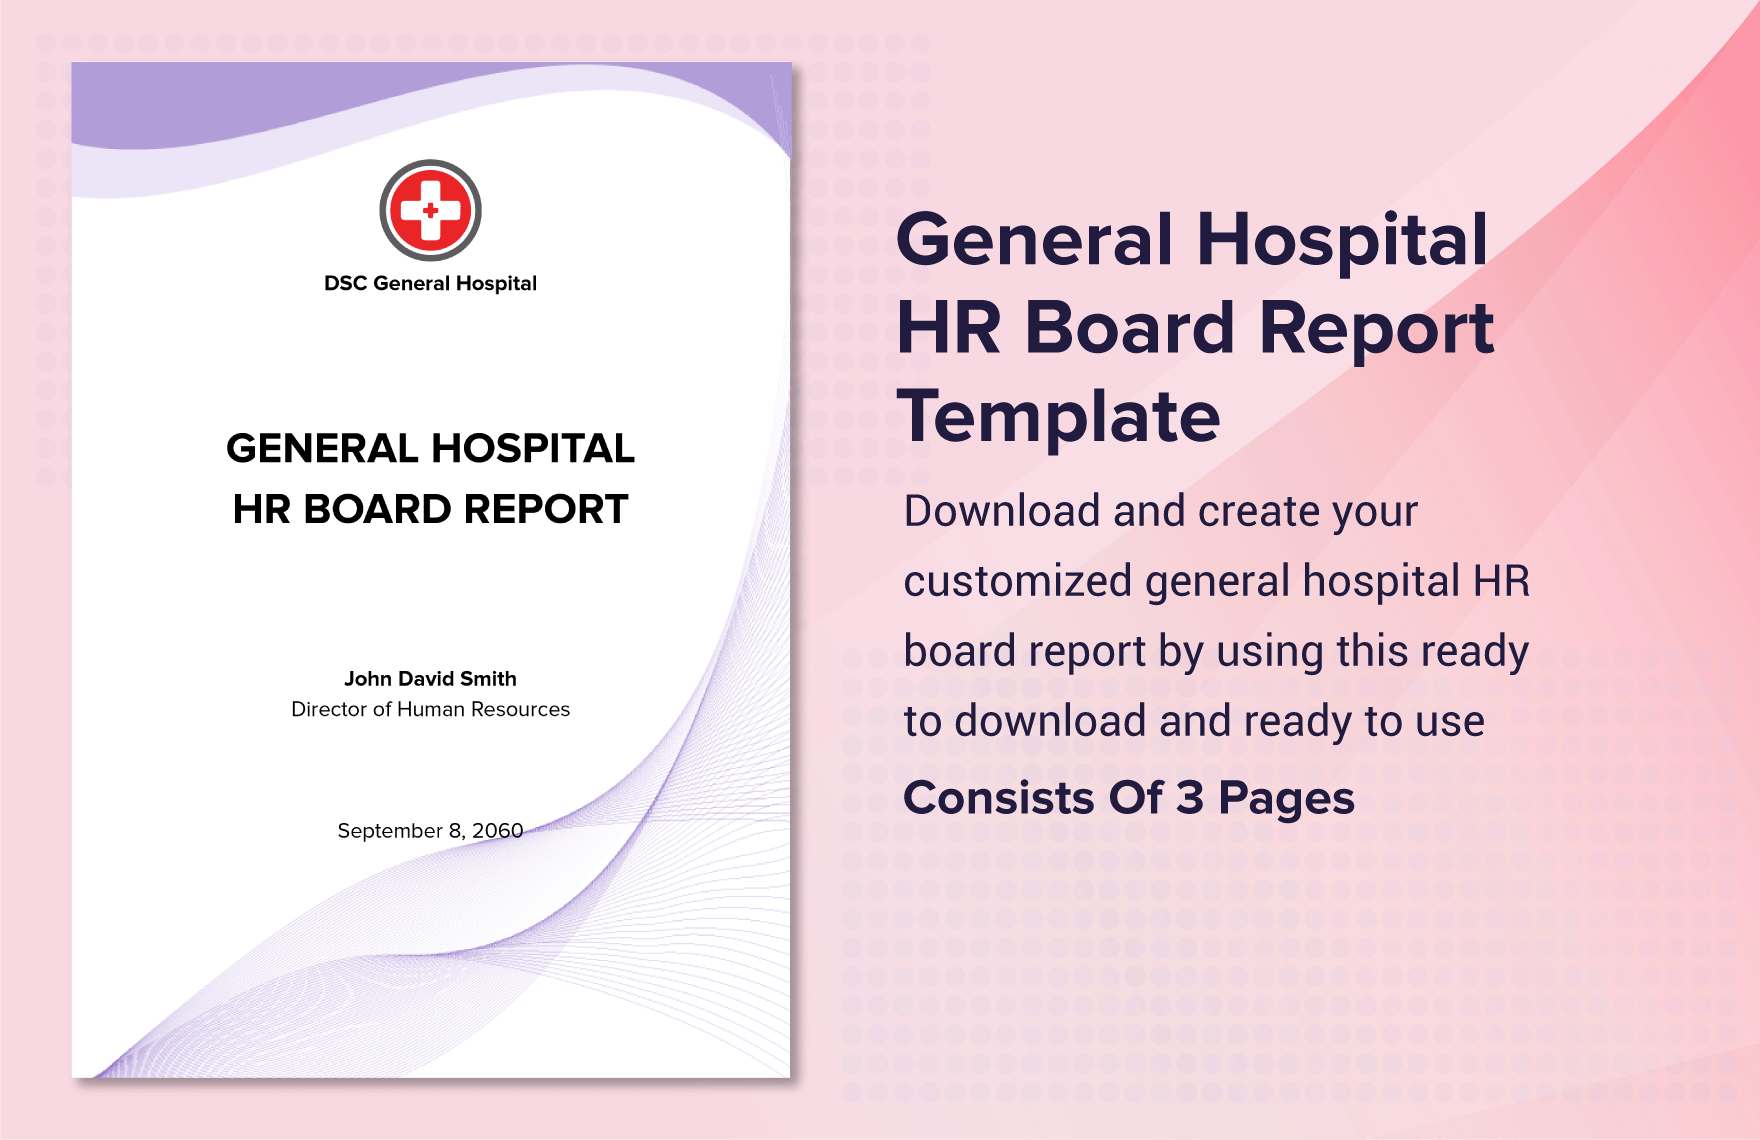 General Hospital HR Board Report Template